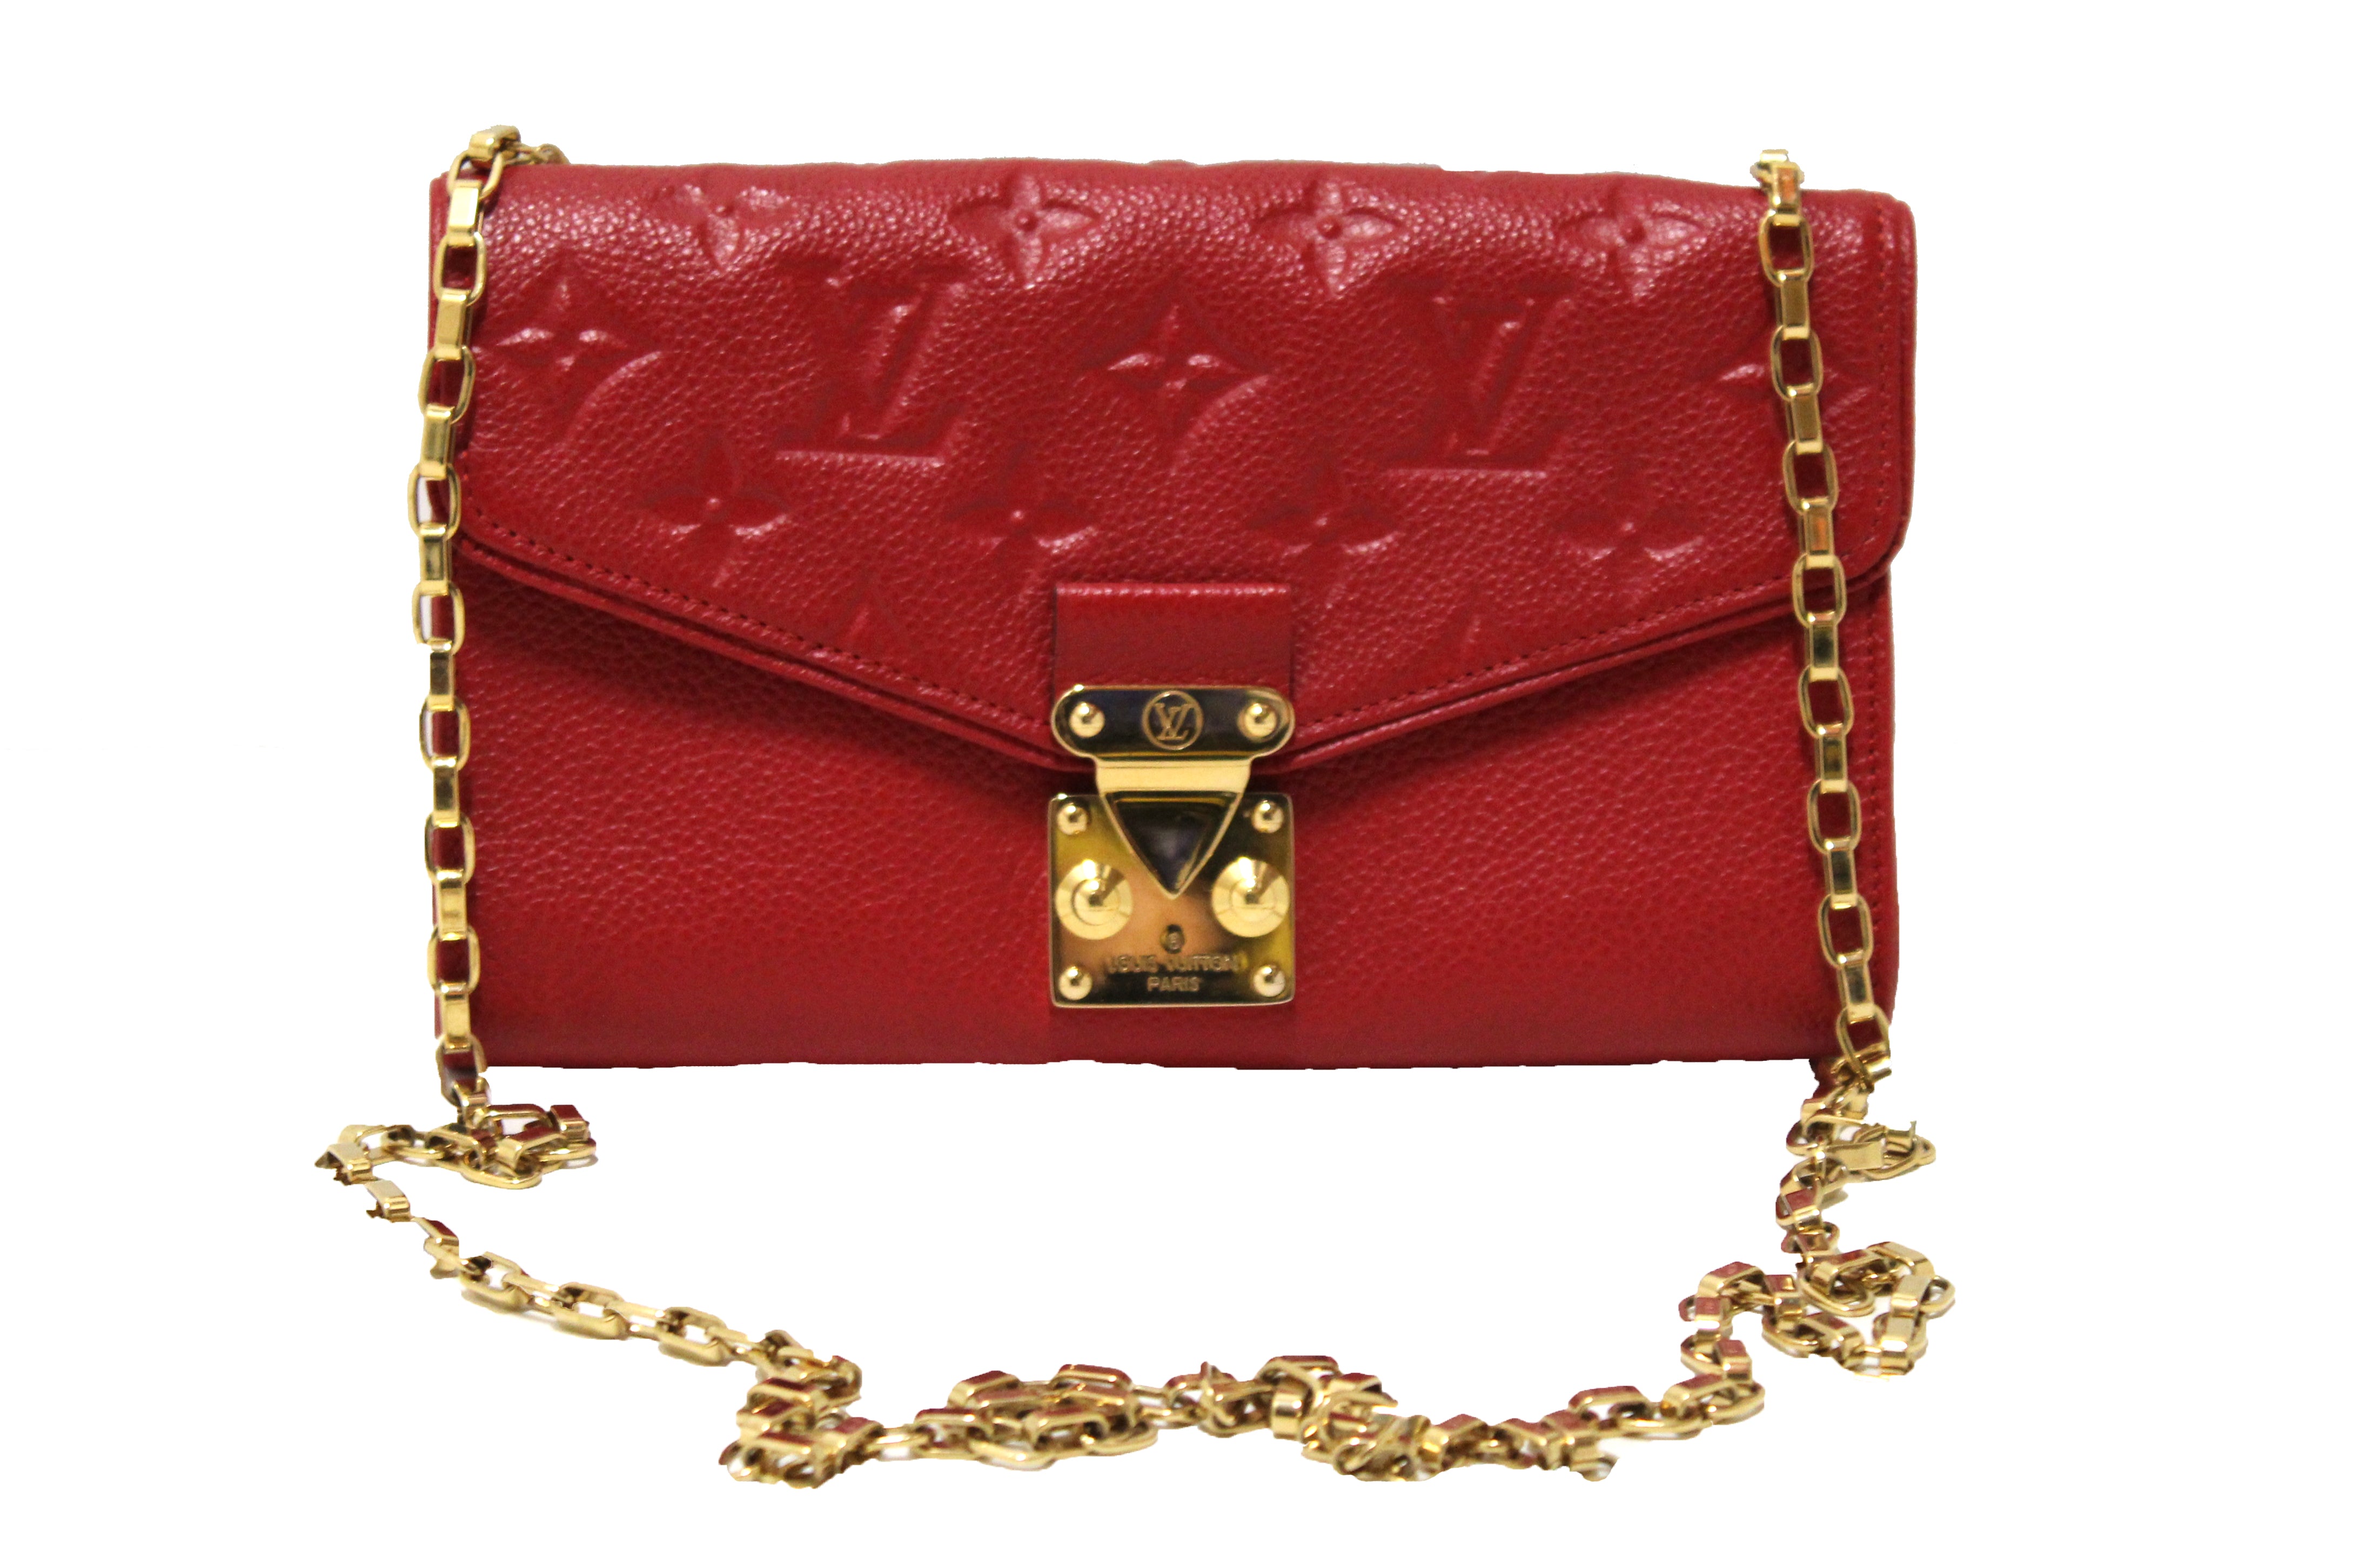 Authentic Louis Vuitton Red Empreinte Leather Saint-Germain Pochette With Chain